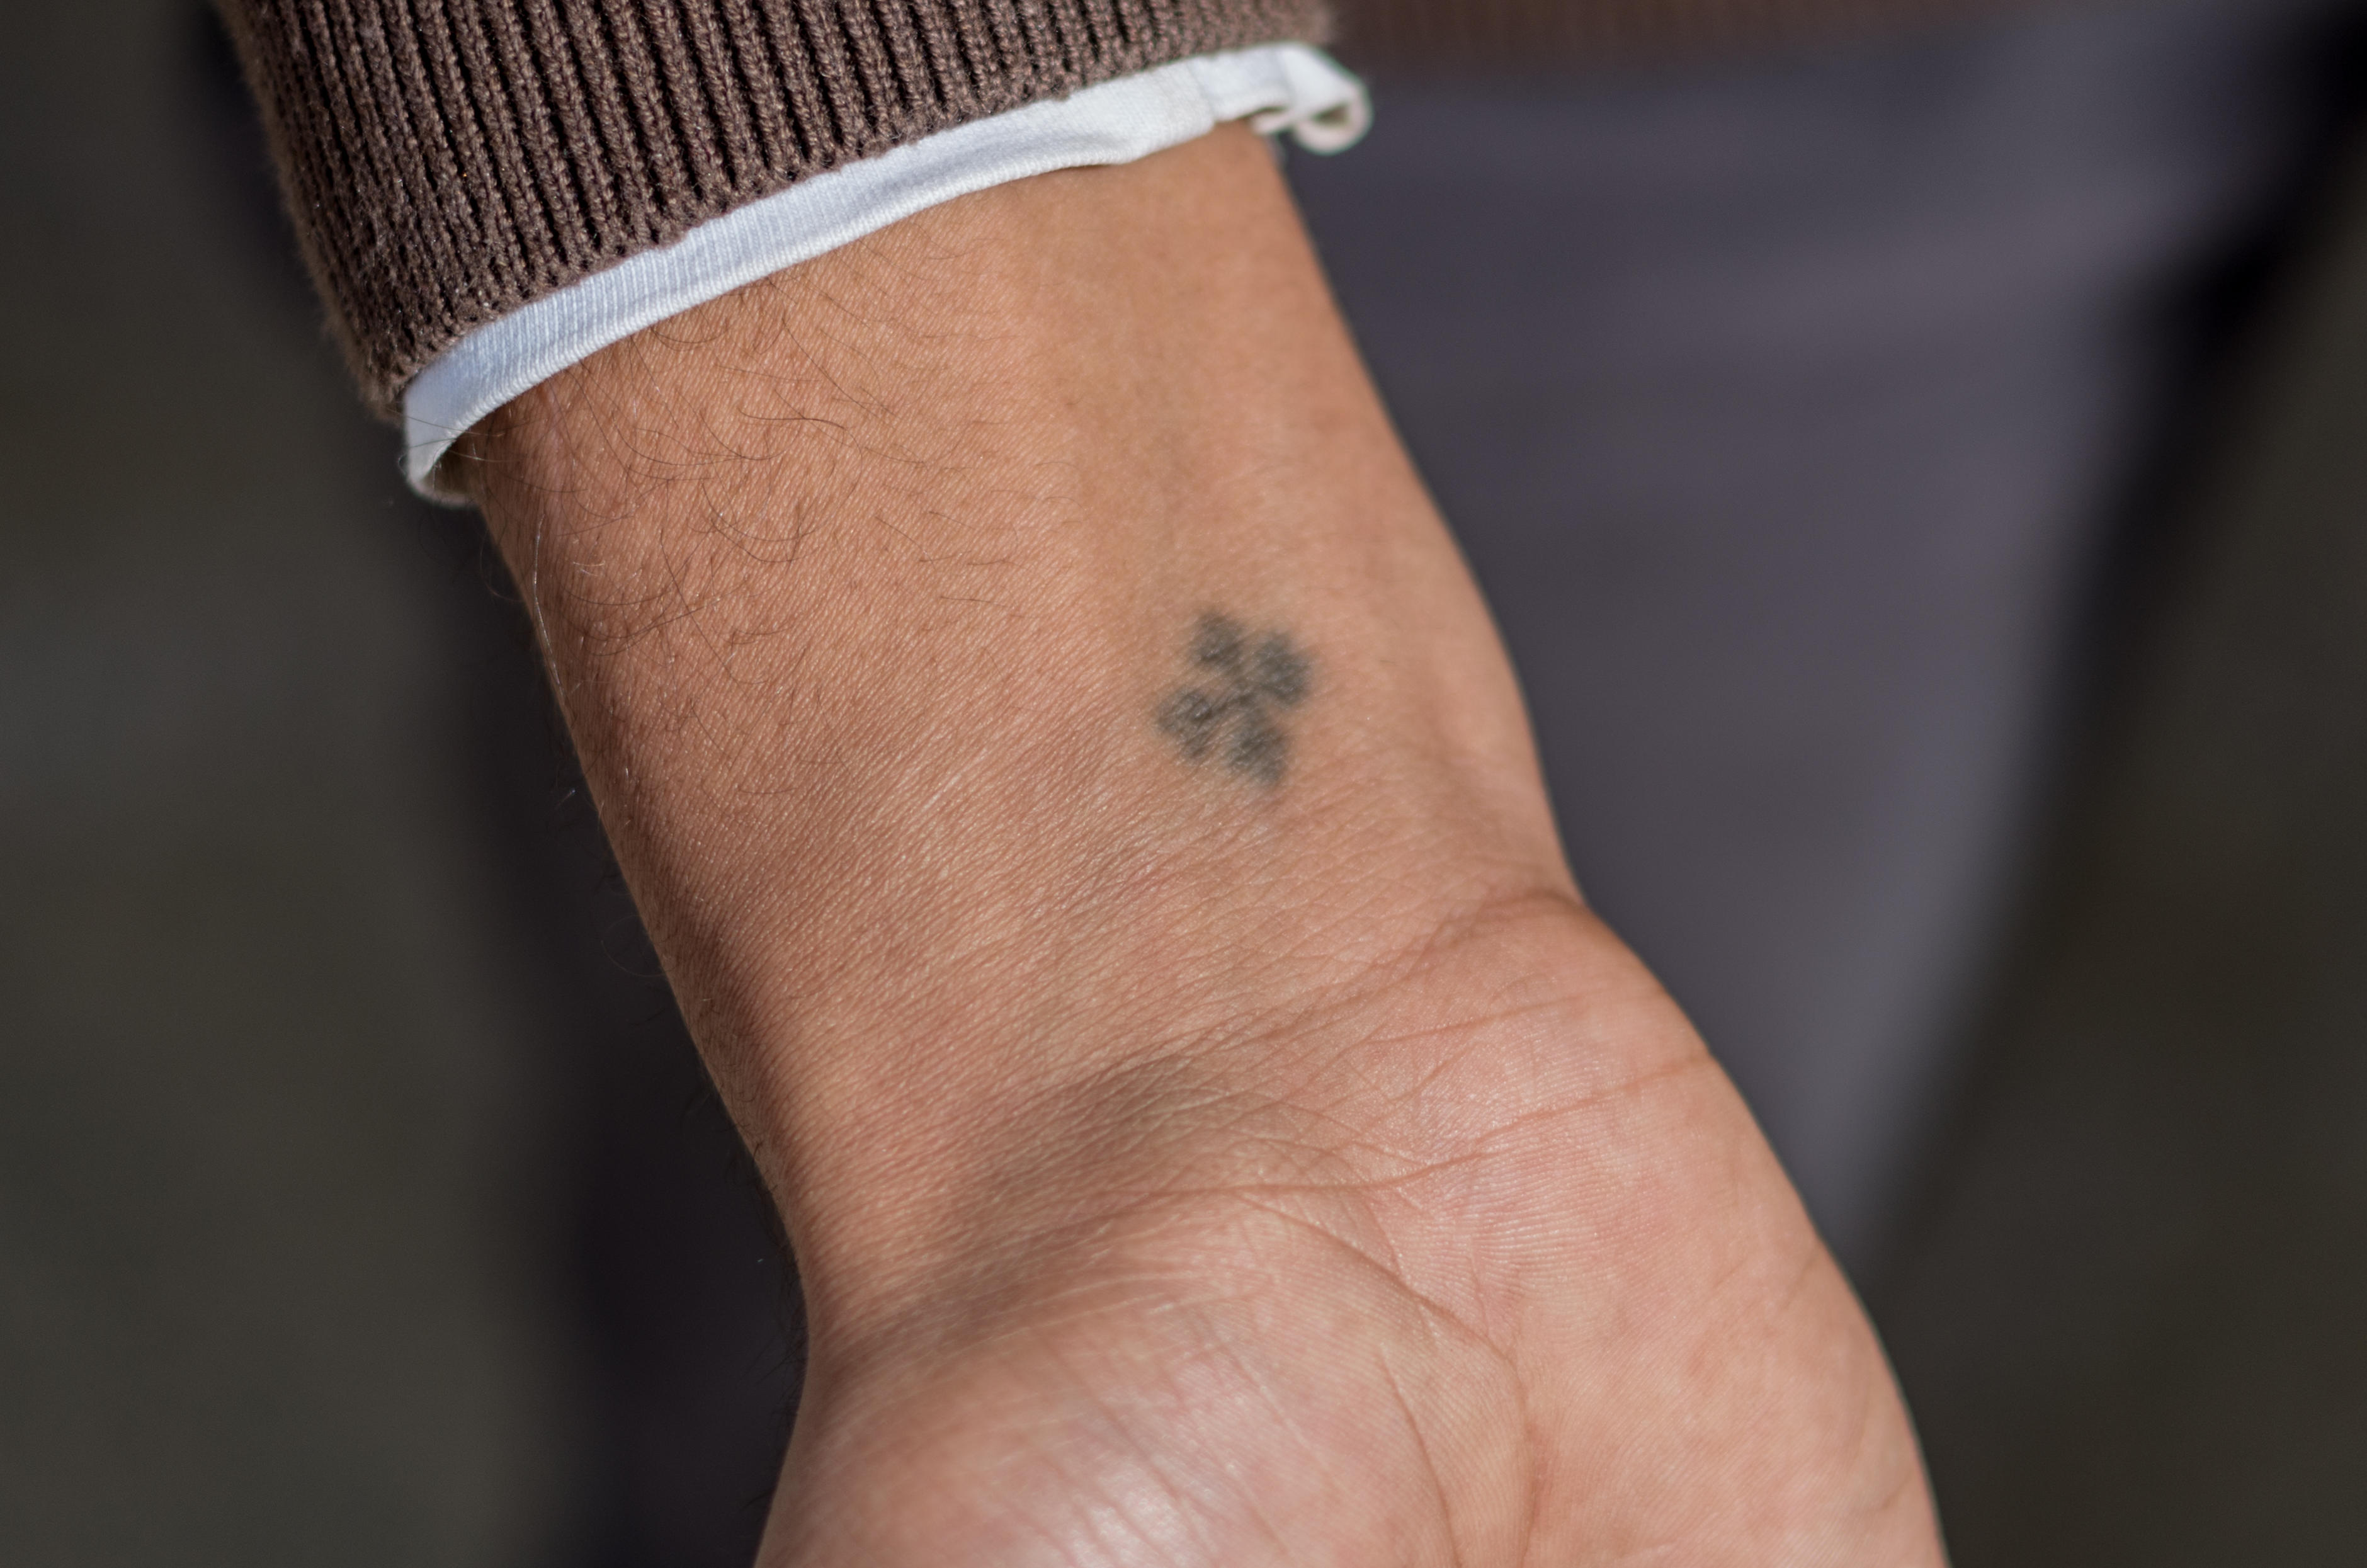 Jewish Tattoos for Radical Visibility